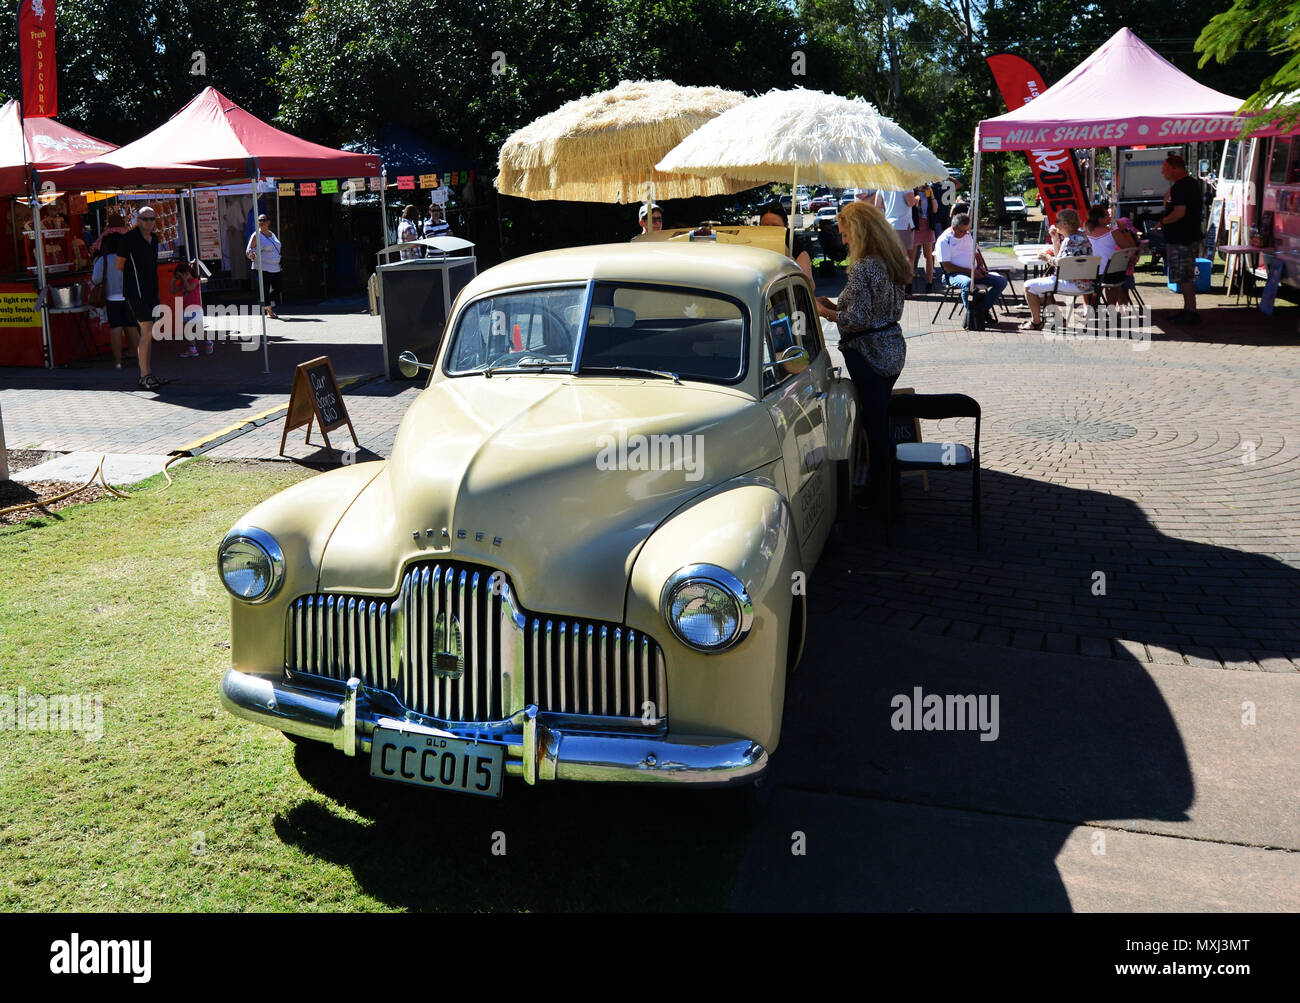 A old Holden car in Eumundi, Queensland, Australia. Stock Photo